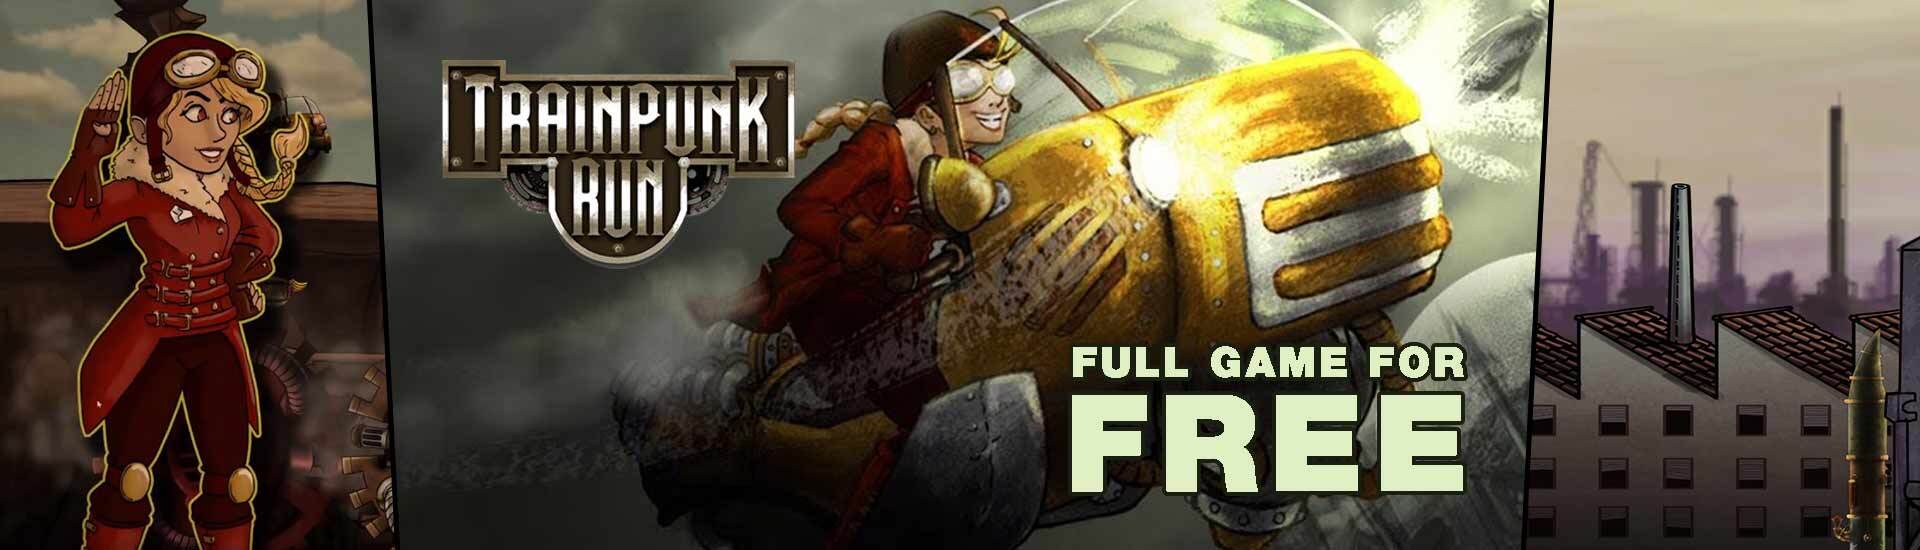 [expired]-[indiegala-]-get-full-free-game-–-trainpunk-run